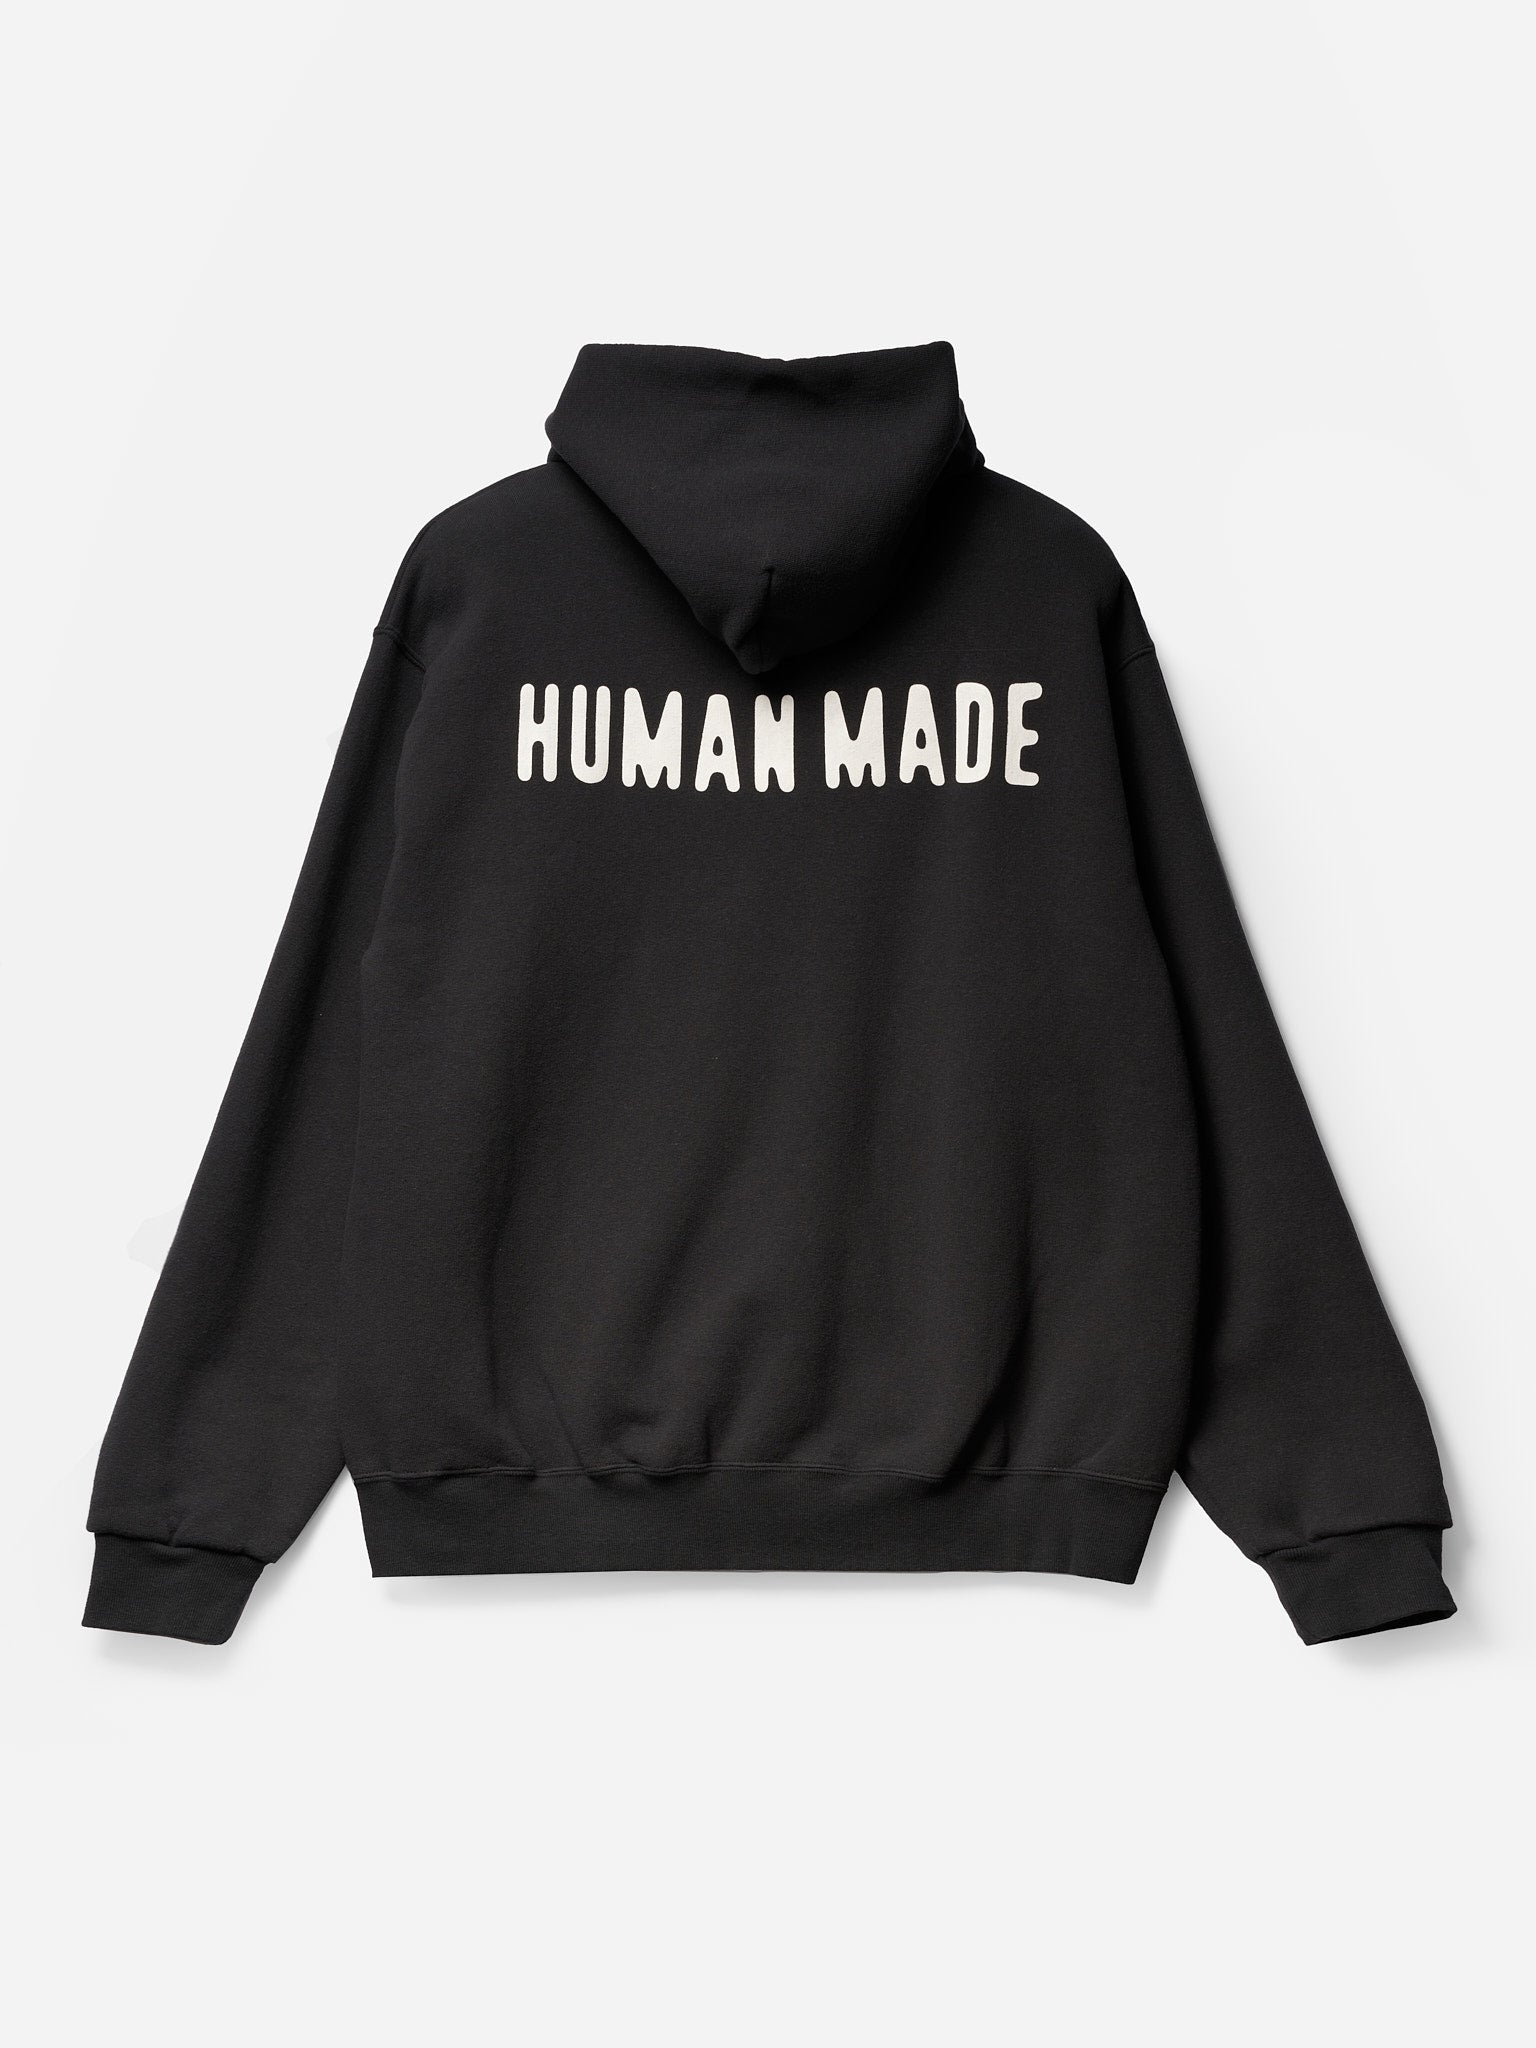 Human Made Zip-Up Hoodie